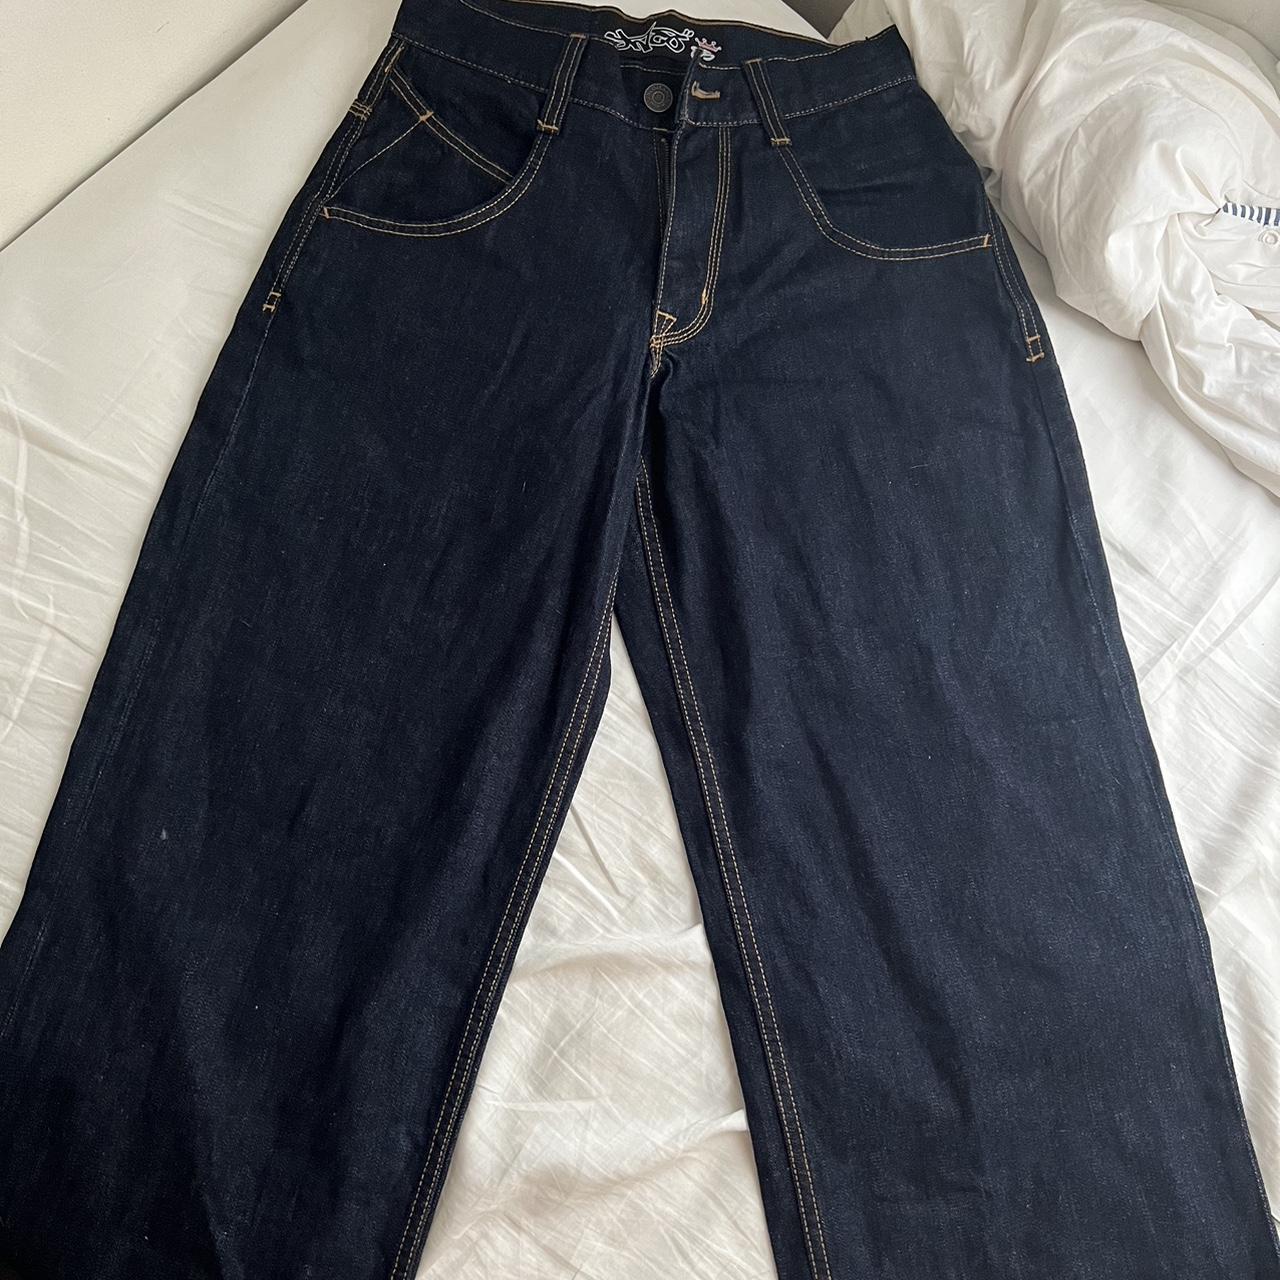 Super wide leg jnco jeans - Depop